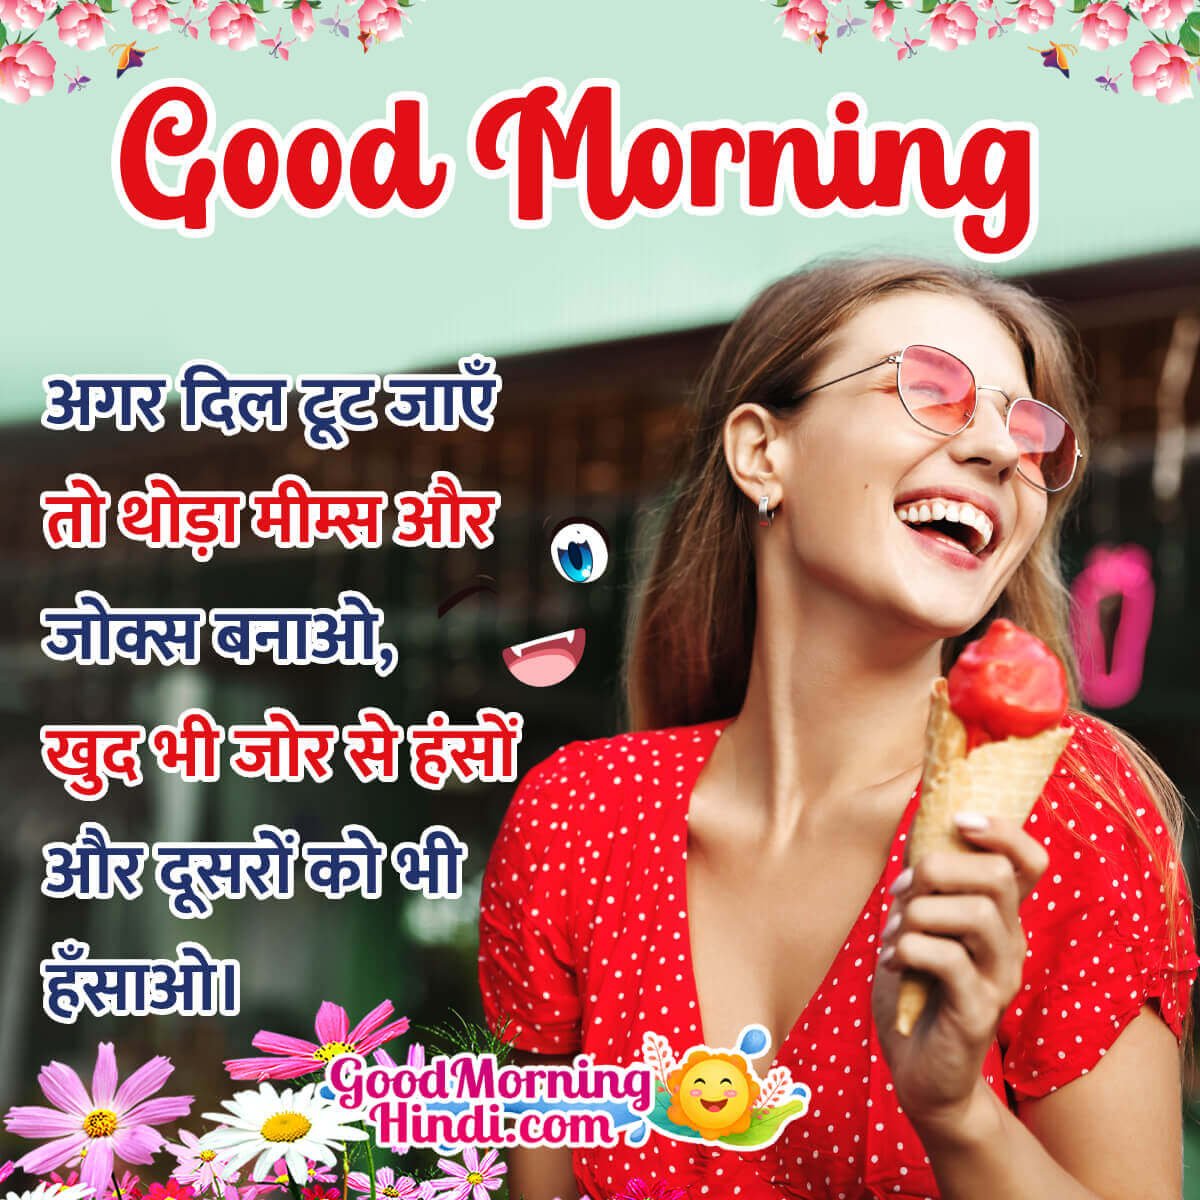 Good Morning Hindi Quotes - Good Morning Wishes & Images In Hindi